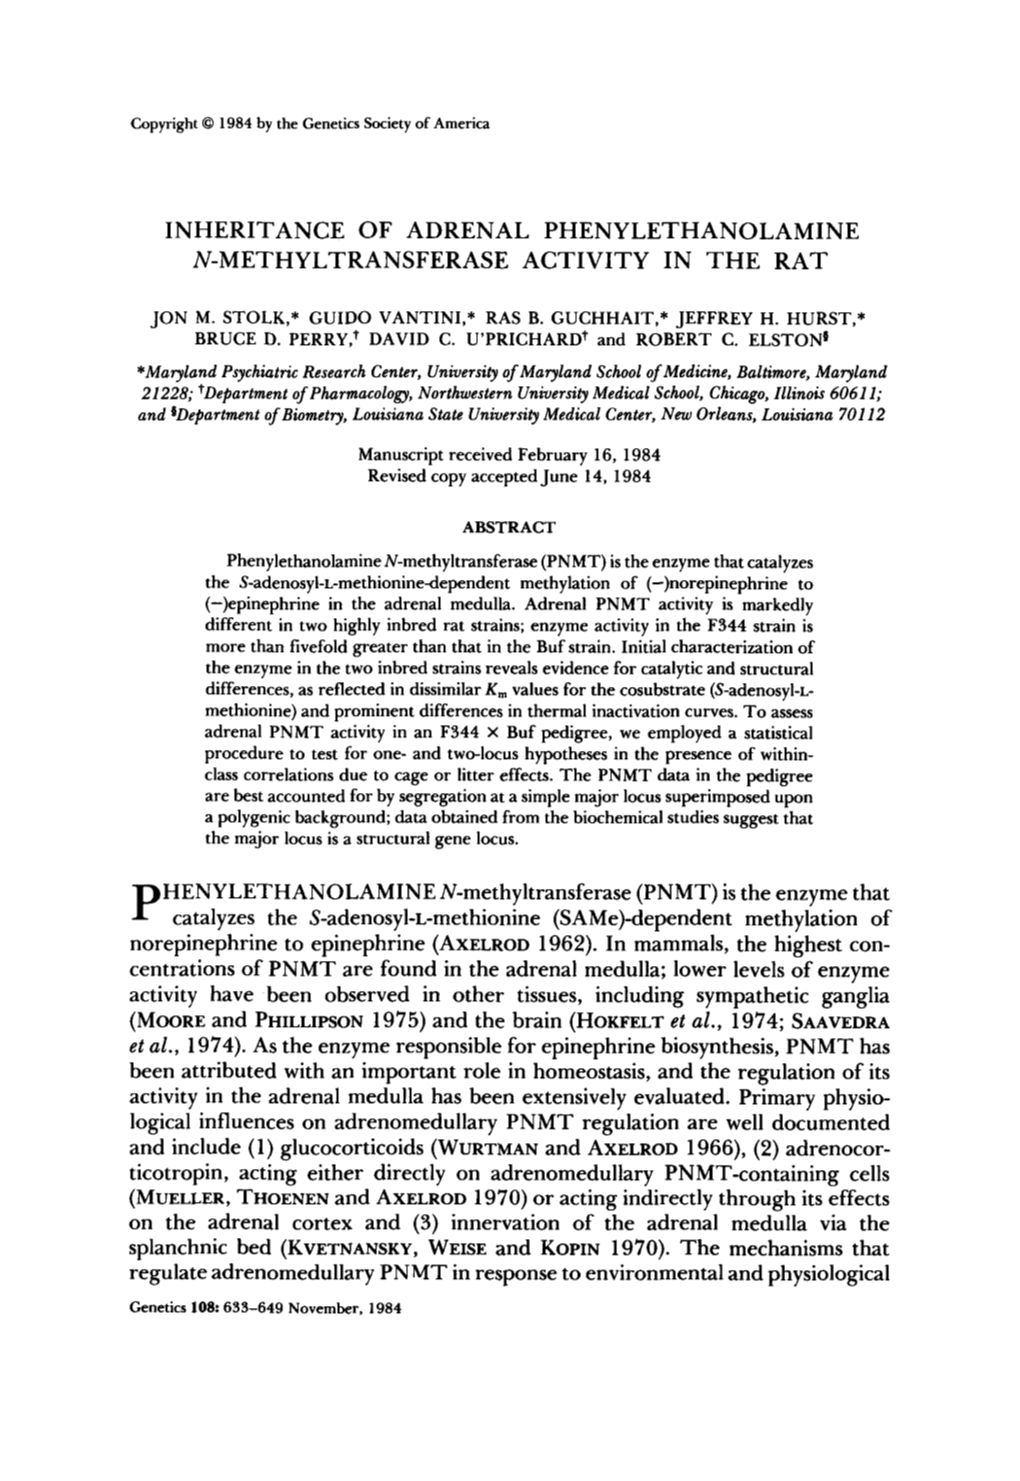 Inheritance of Adrenal Phenylethanolamine N-Methyltransferase Activity in the Rat